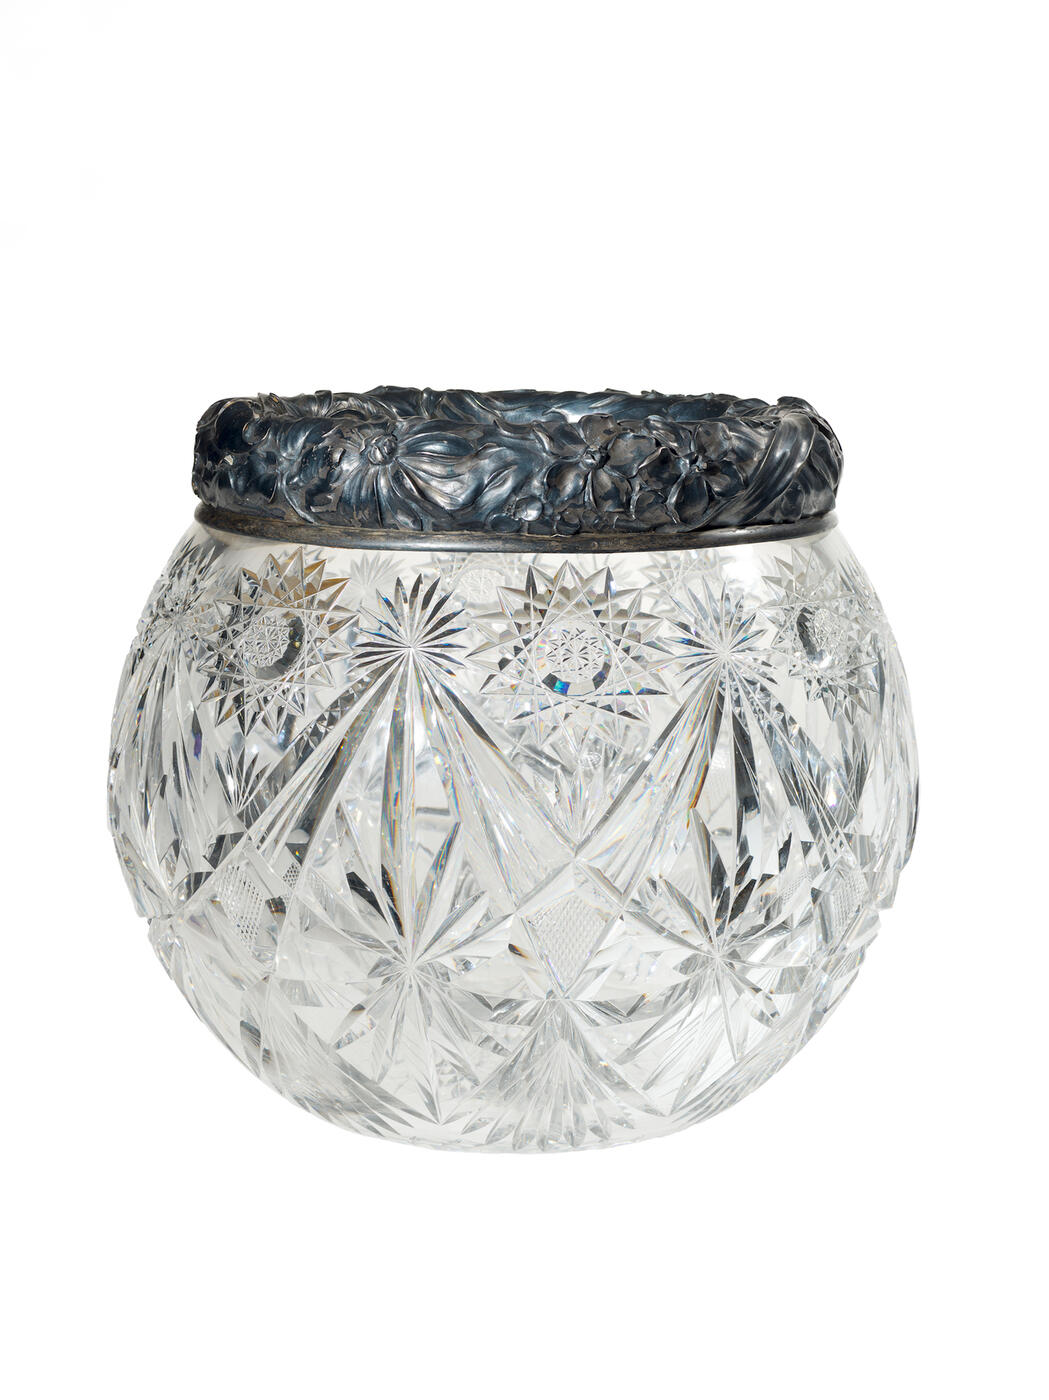 An Impressive Cut-Glass Vase